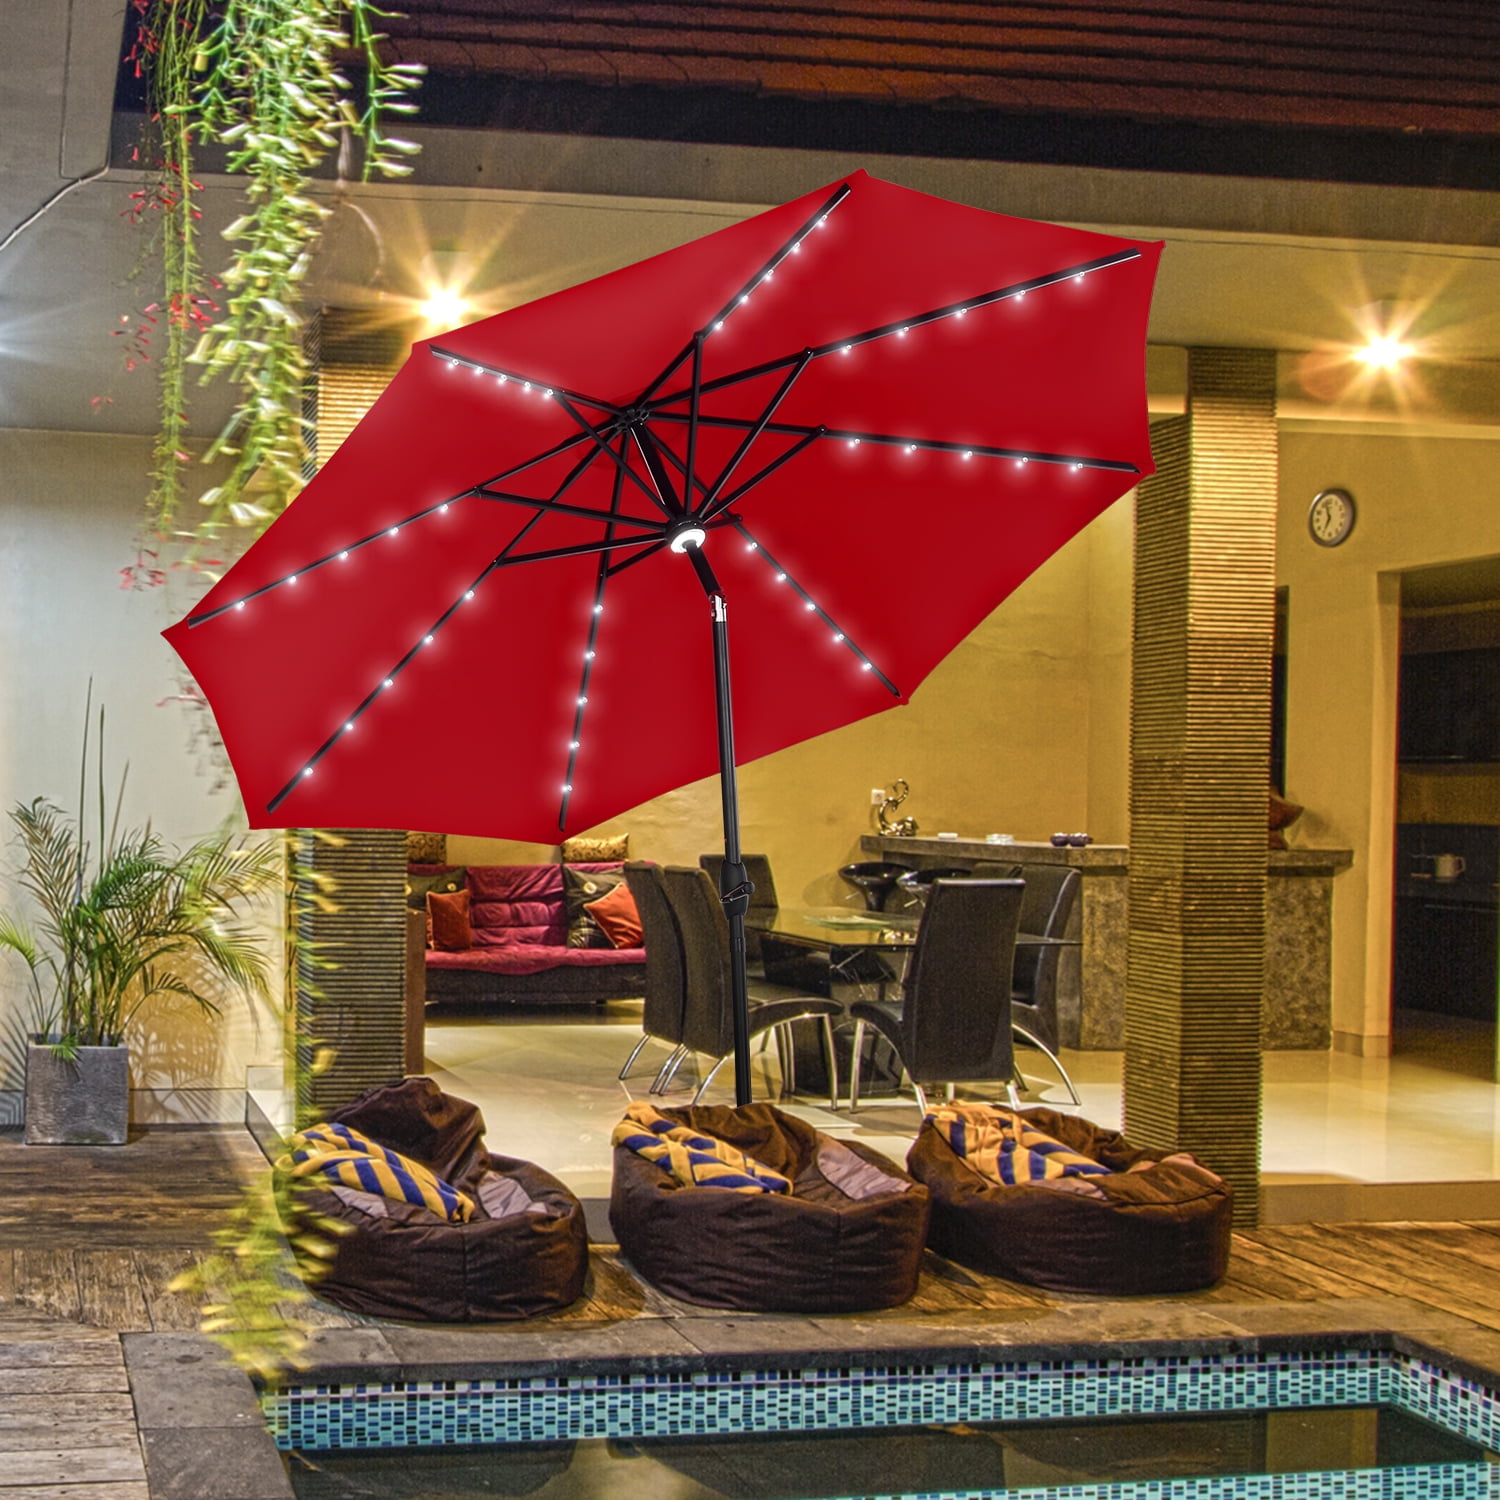 10Ft Lighted Aluminum Patio Table Market Umbrella with Tilt and Crank for Garden,Deck,Backyard,Pool Light Blue